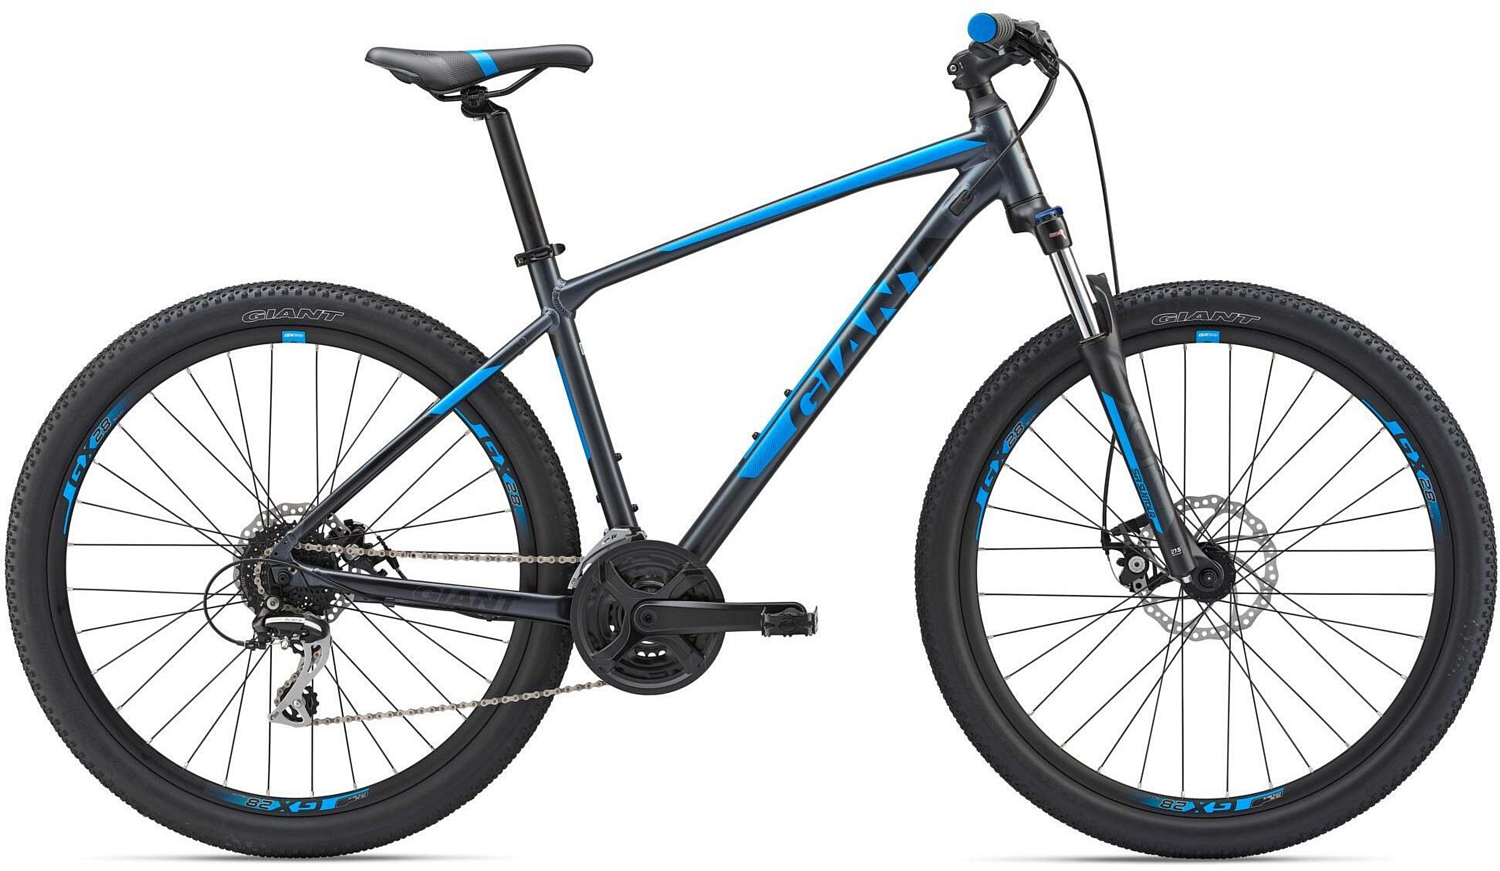 Велосипед Giant ATX 1 27.5 2019 Charcoal